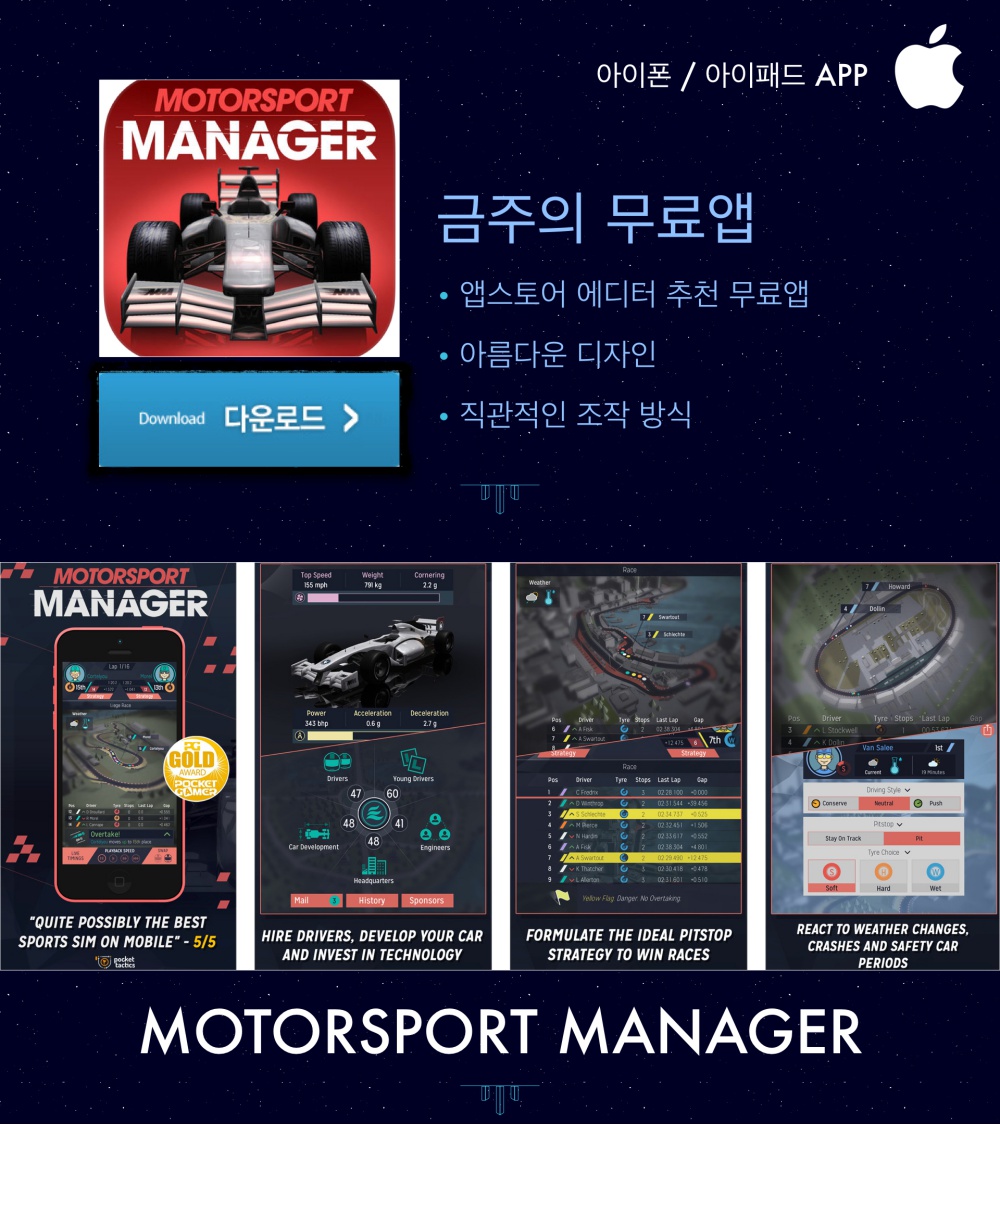 https://itunes.apple.com/kr/app/motorsport-manager/id776865453?mt=8